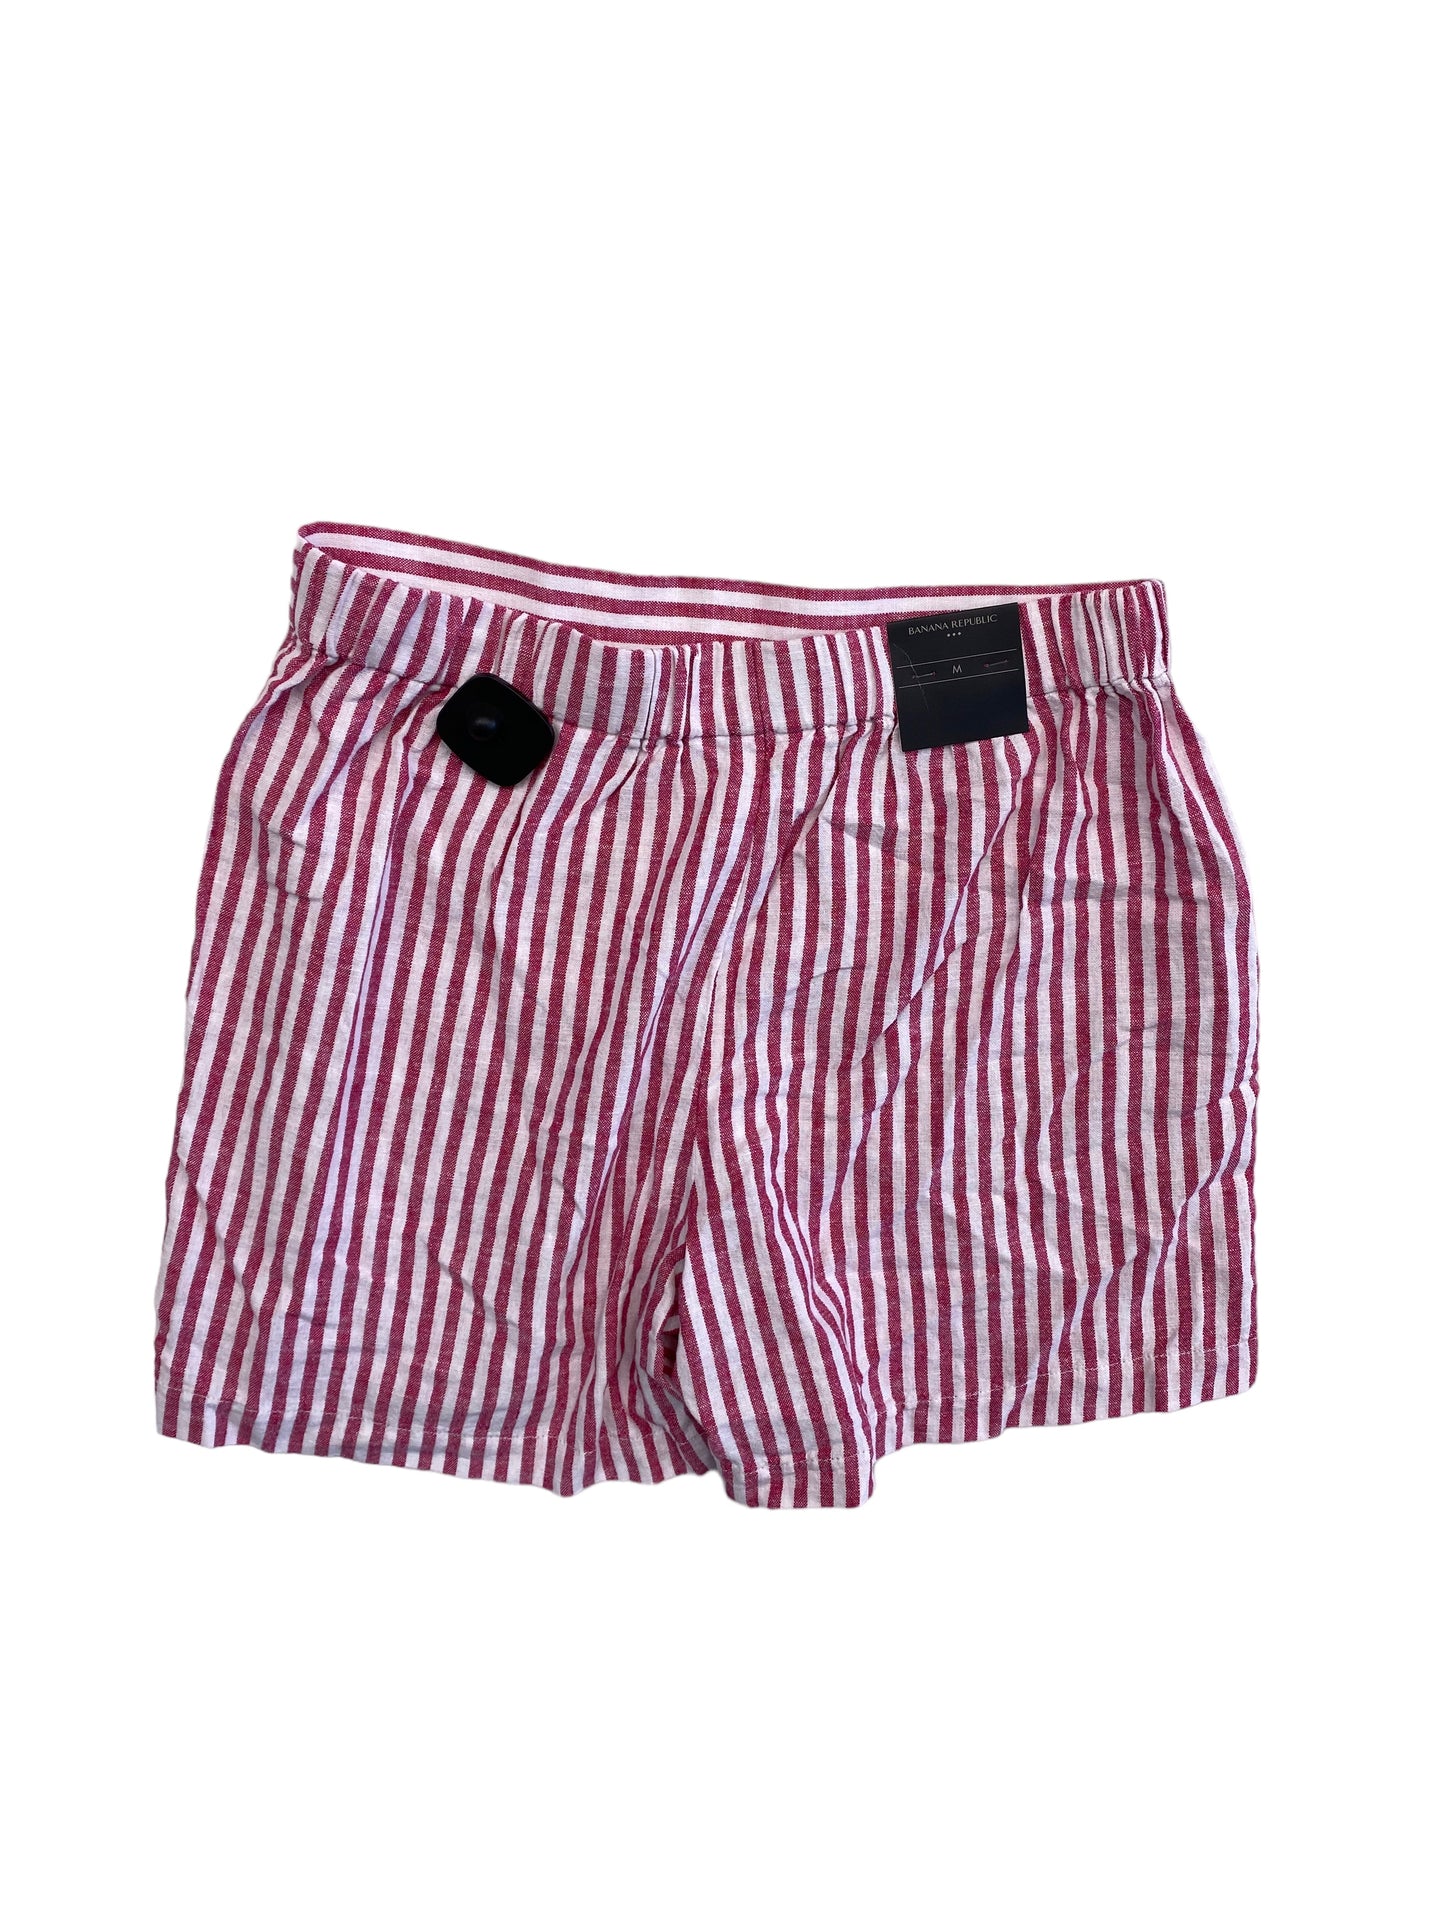 Striped Pattern Shorts Banana Republic, Size M